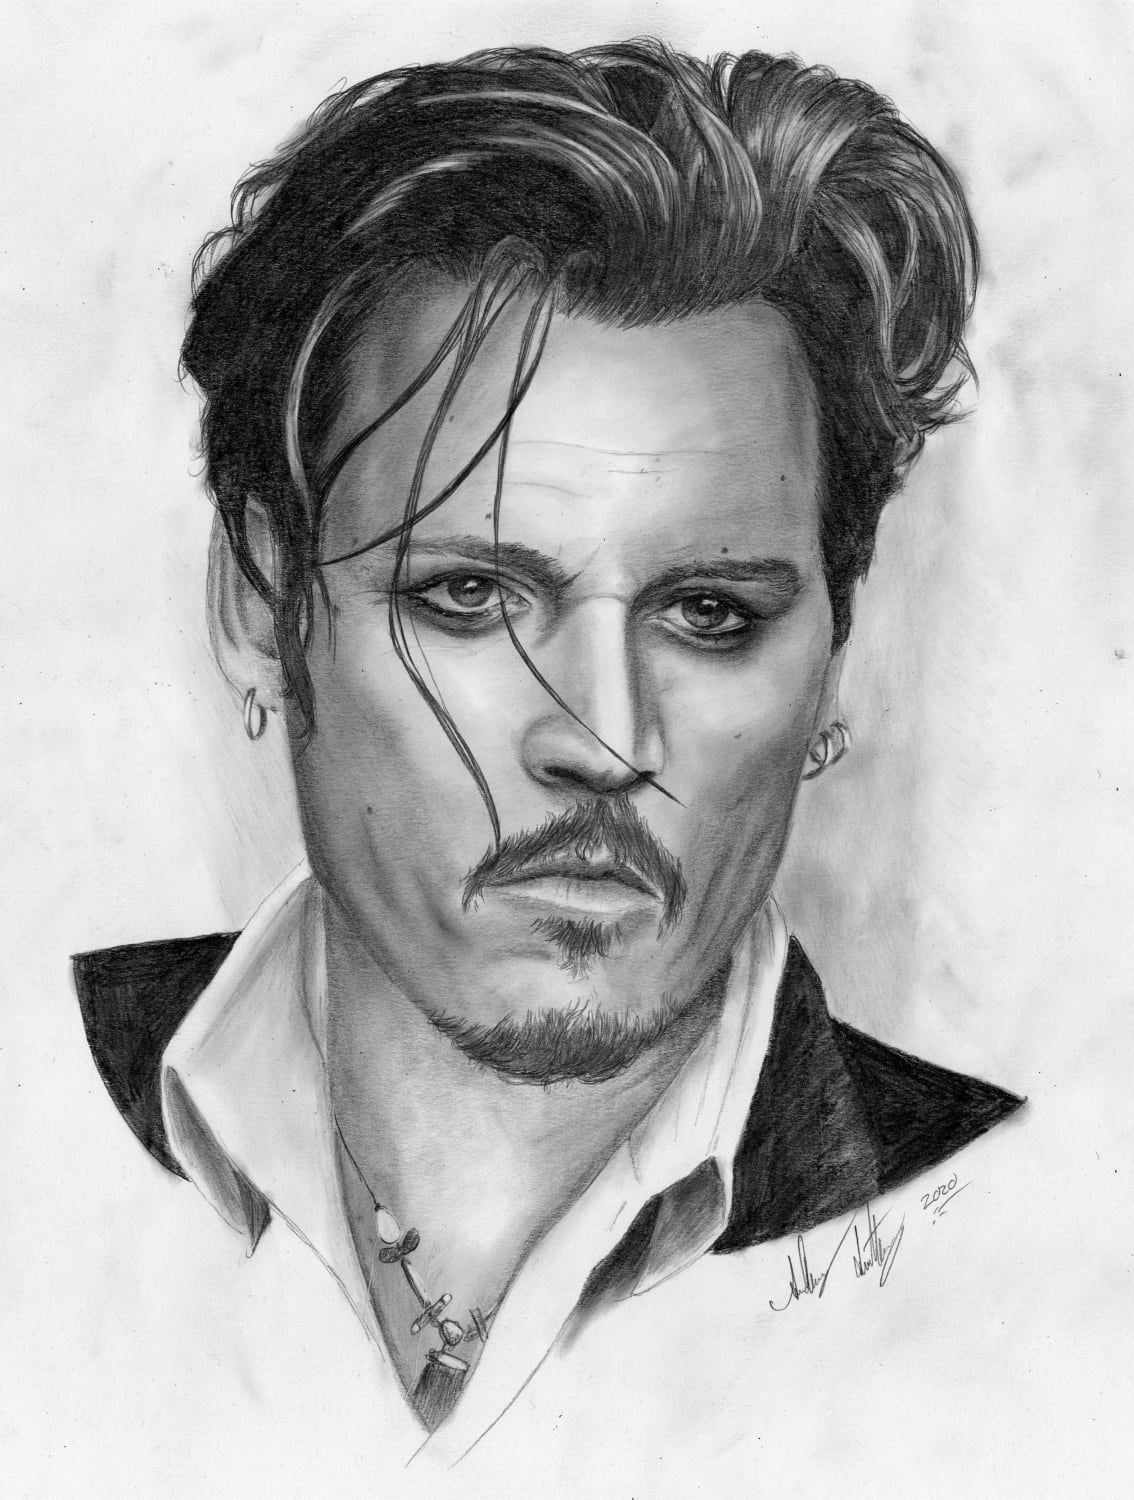 My portrait of Johnny Depp